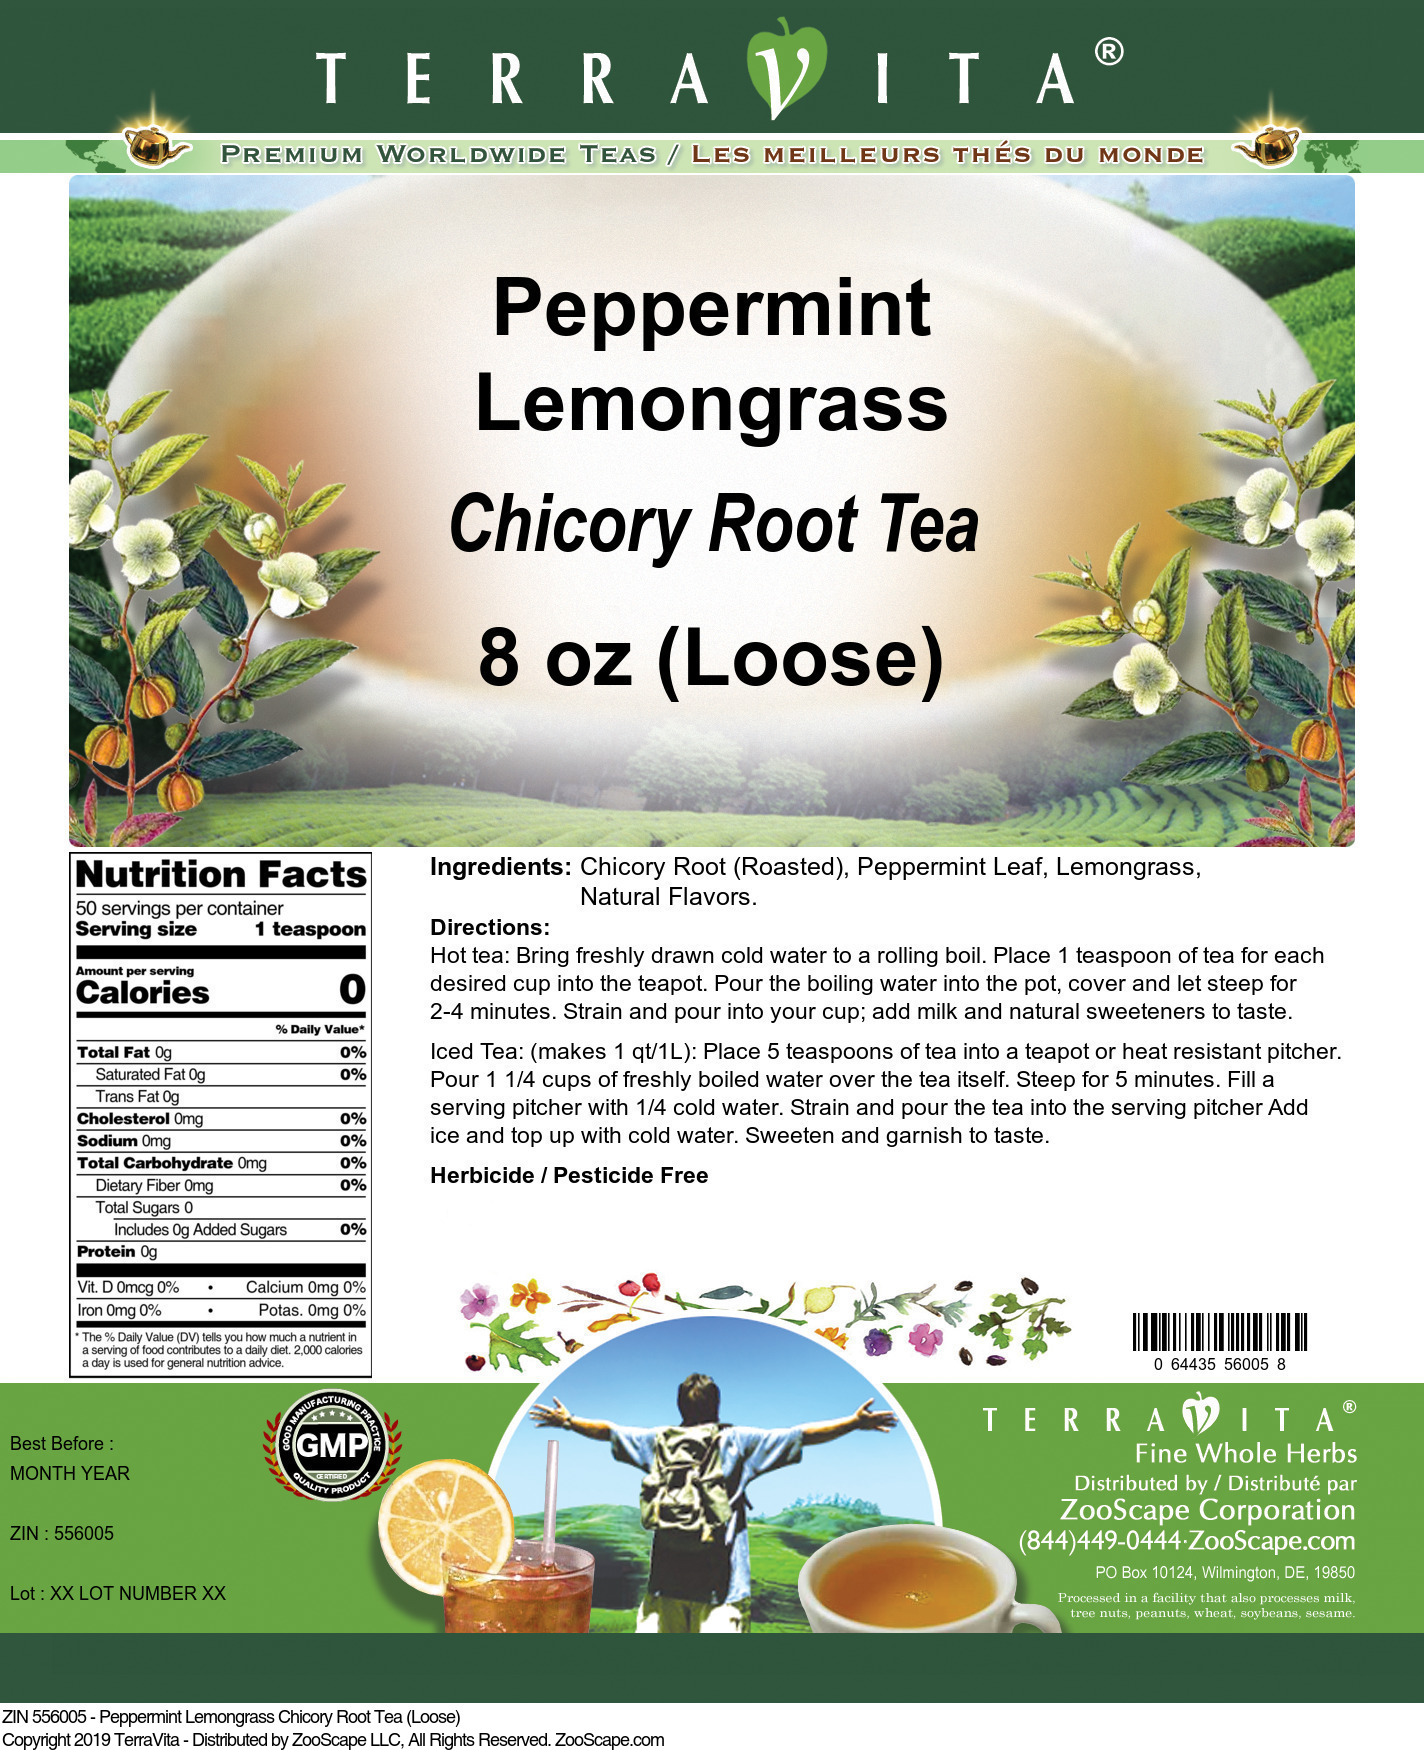 Peppermint Lemongrass Chicory Root Tea (Loose) - Label